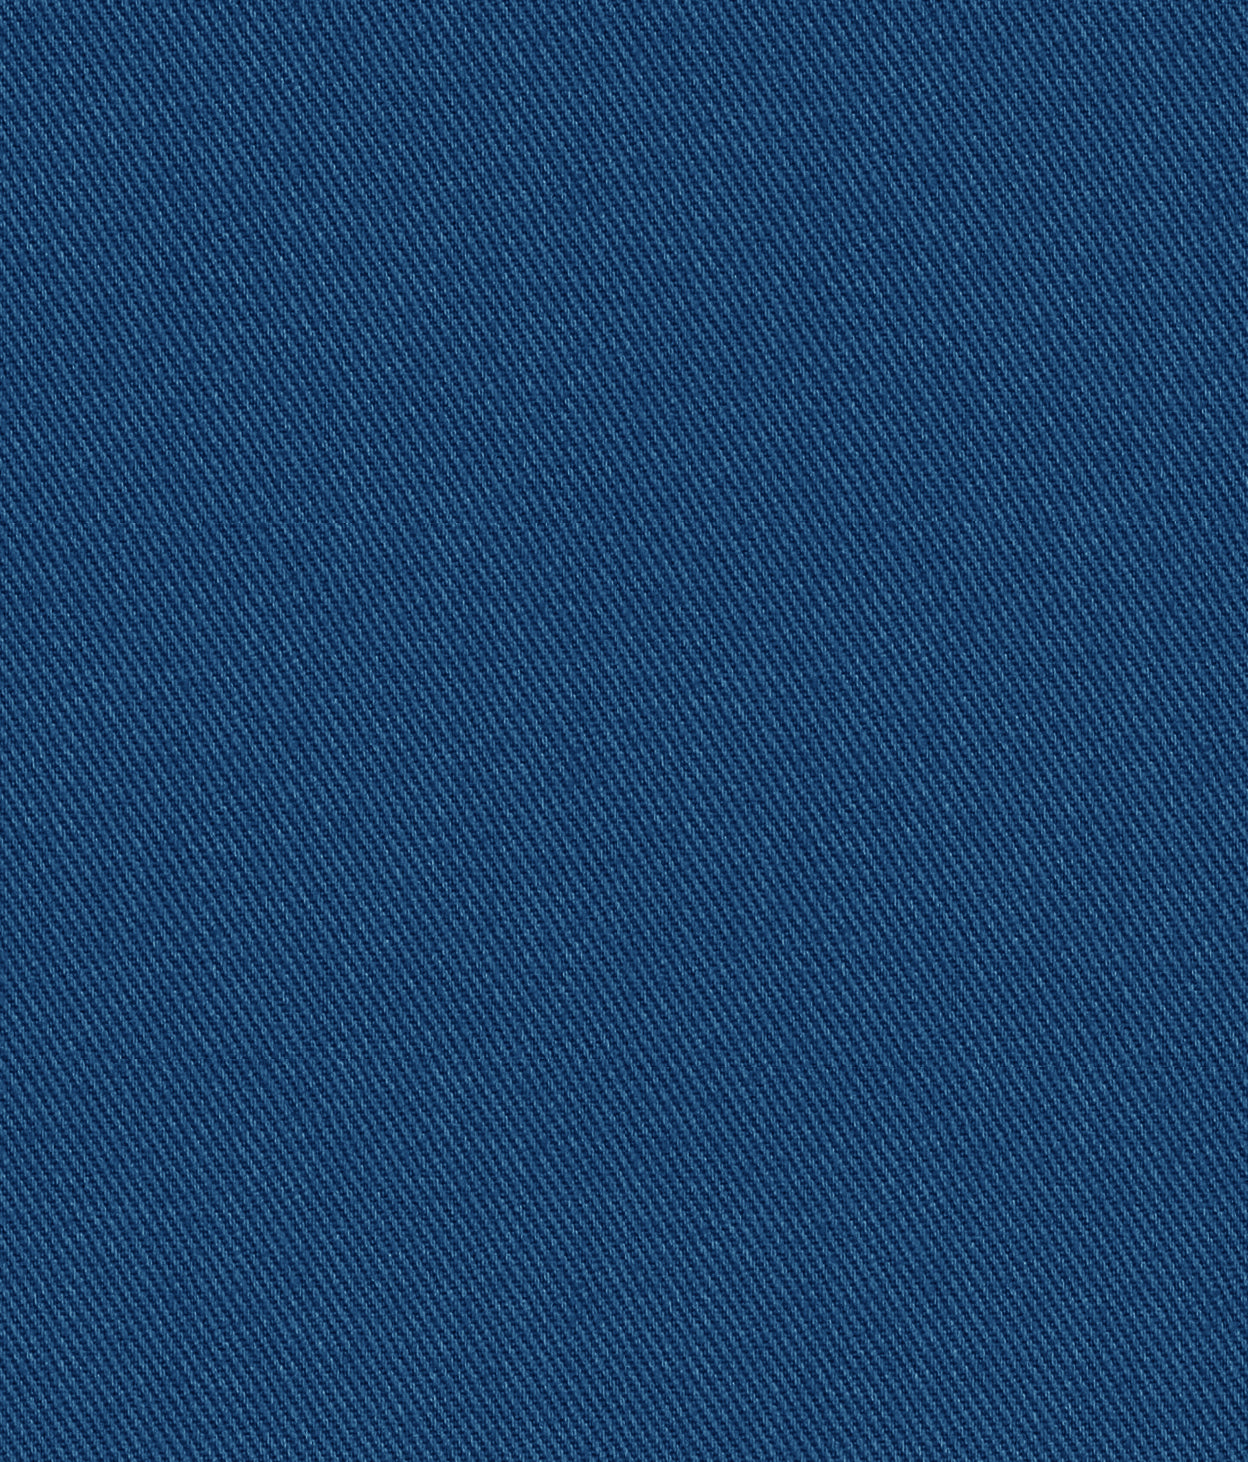 Cotton Blend Fabric in Blue Horizon